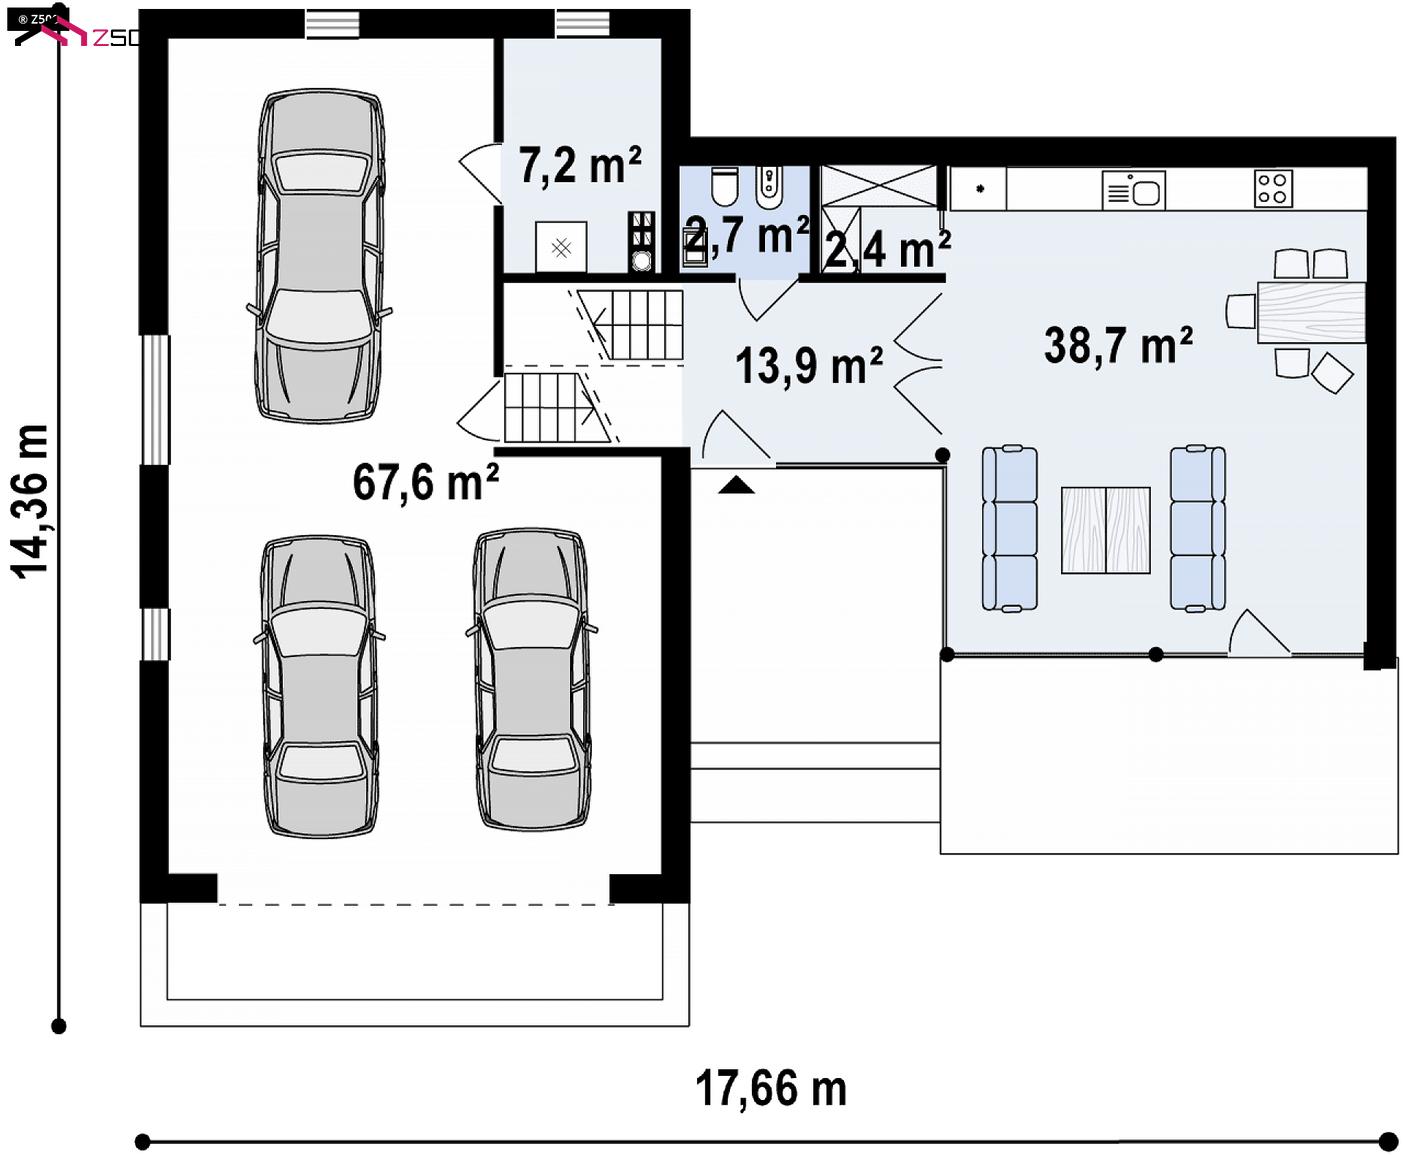 1-ый этаж - план проекта Zx190